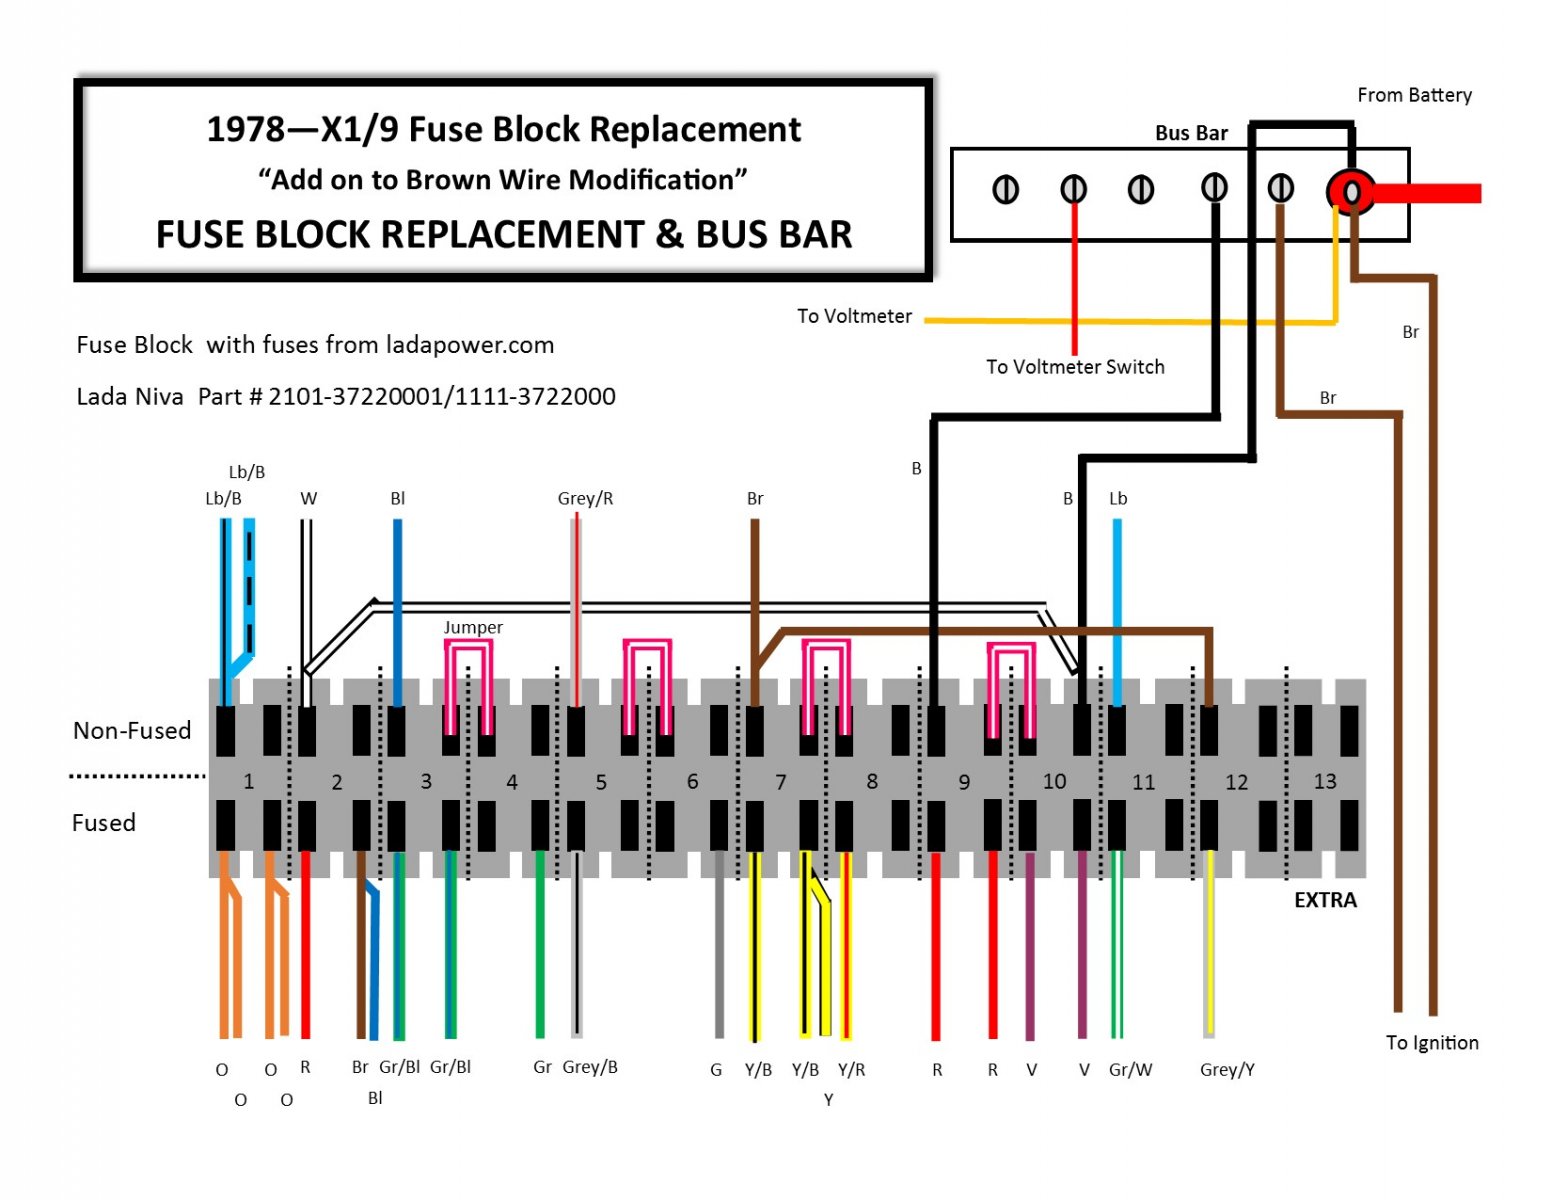 FIAT X19 - 1978 New Fuse Block & Bus Bar.jpg